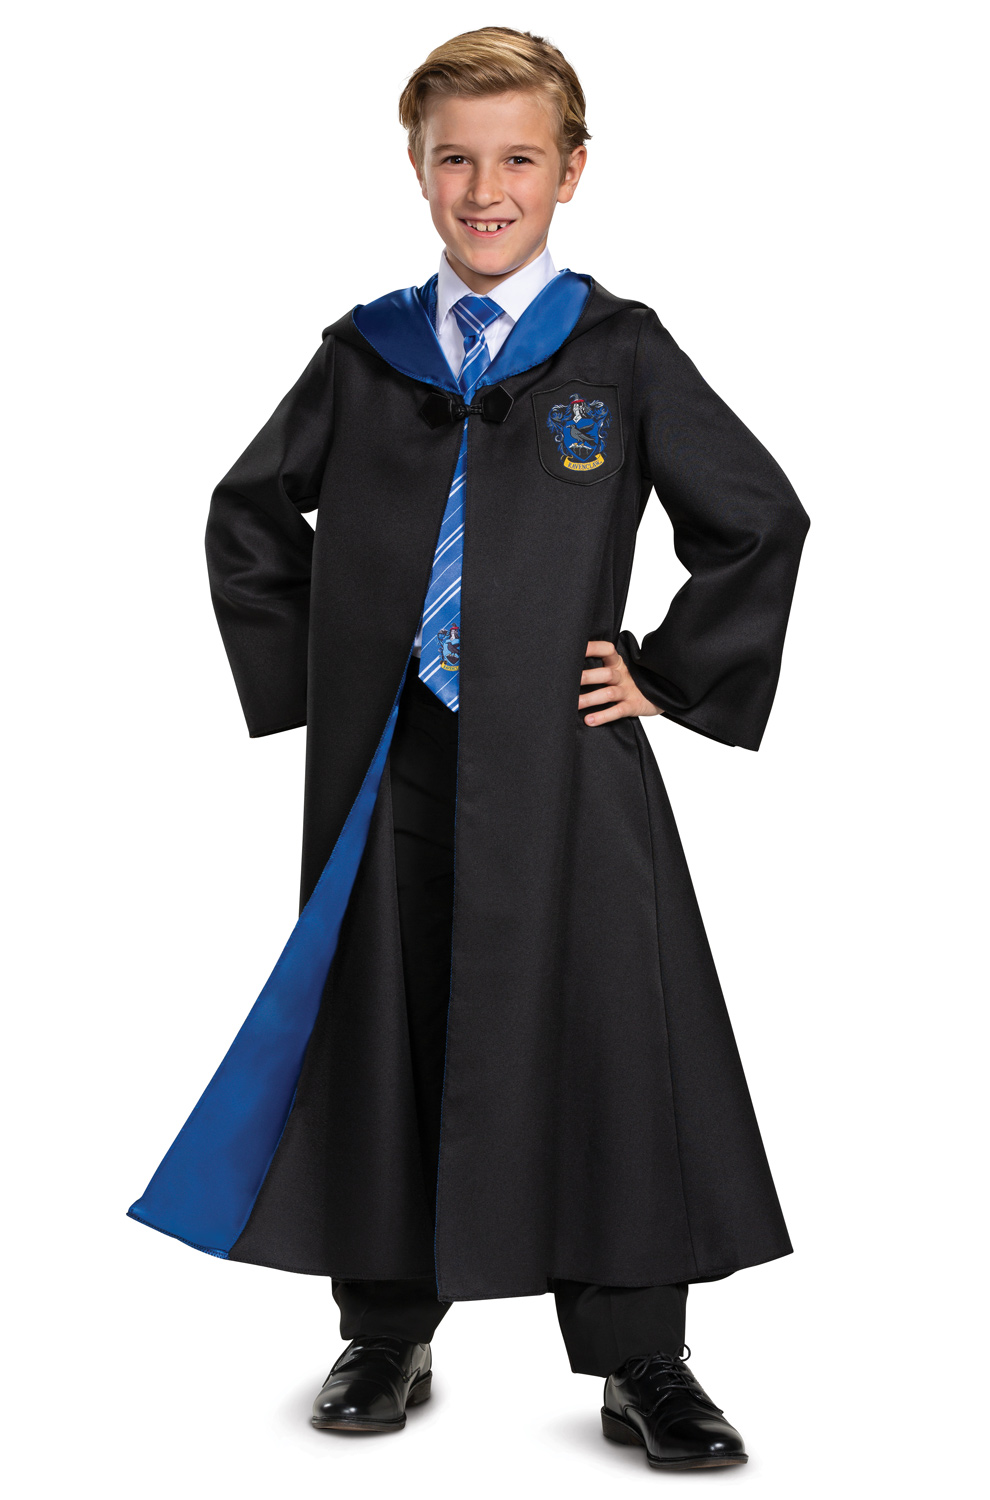 Ravenclaw Robe Child Costume 